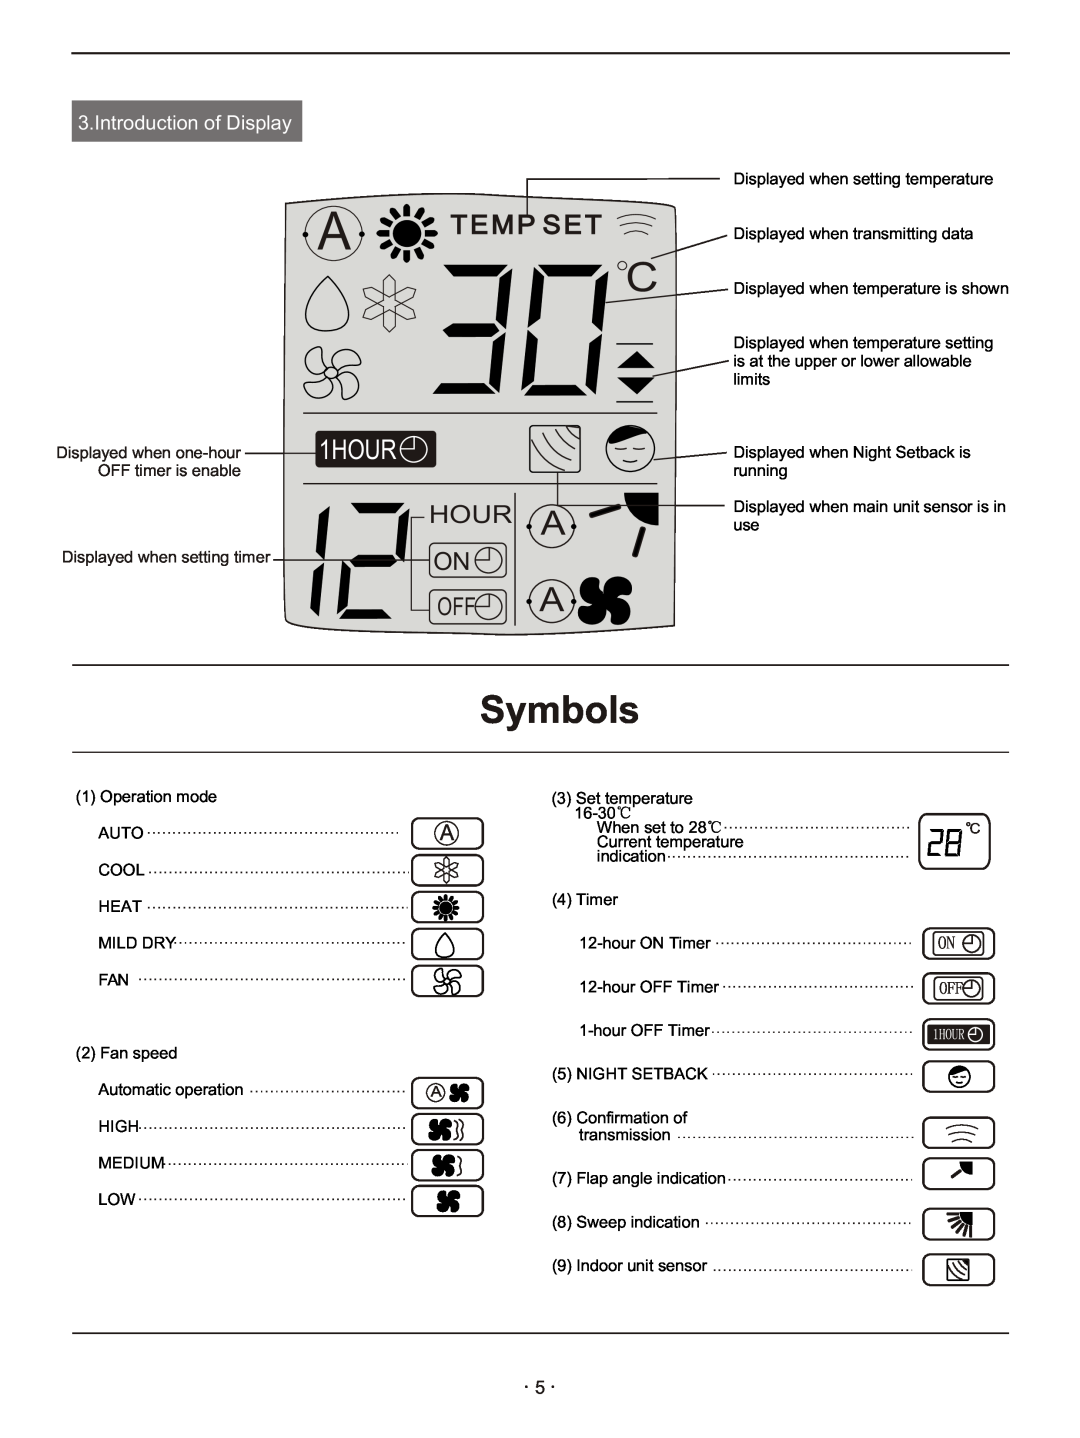 Hisense Group KFR-3208GW instruction manual Atemp Set, Symbols, 1HOUR, Hour A, On Offa, Introduction of Display 